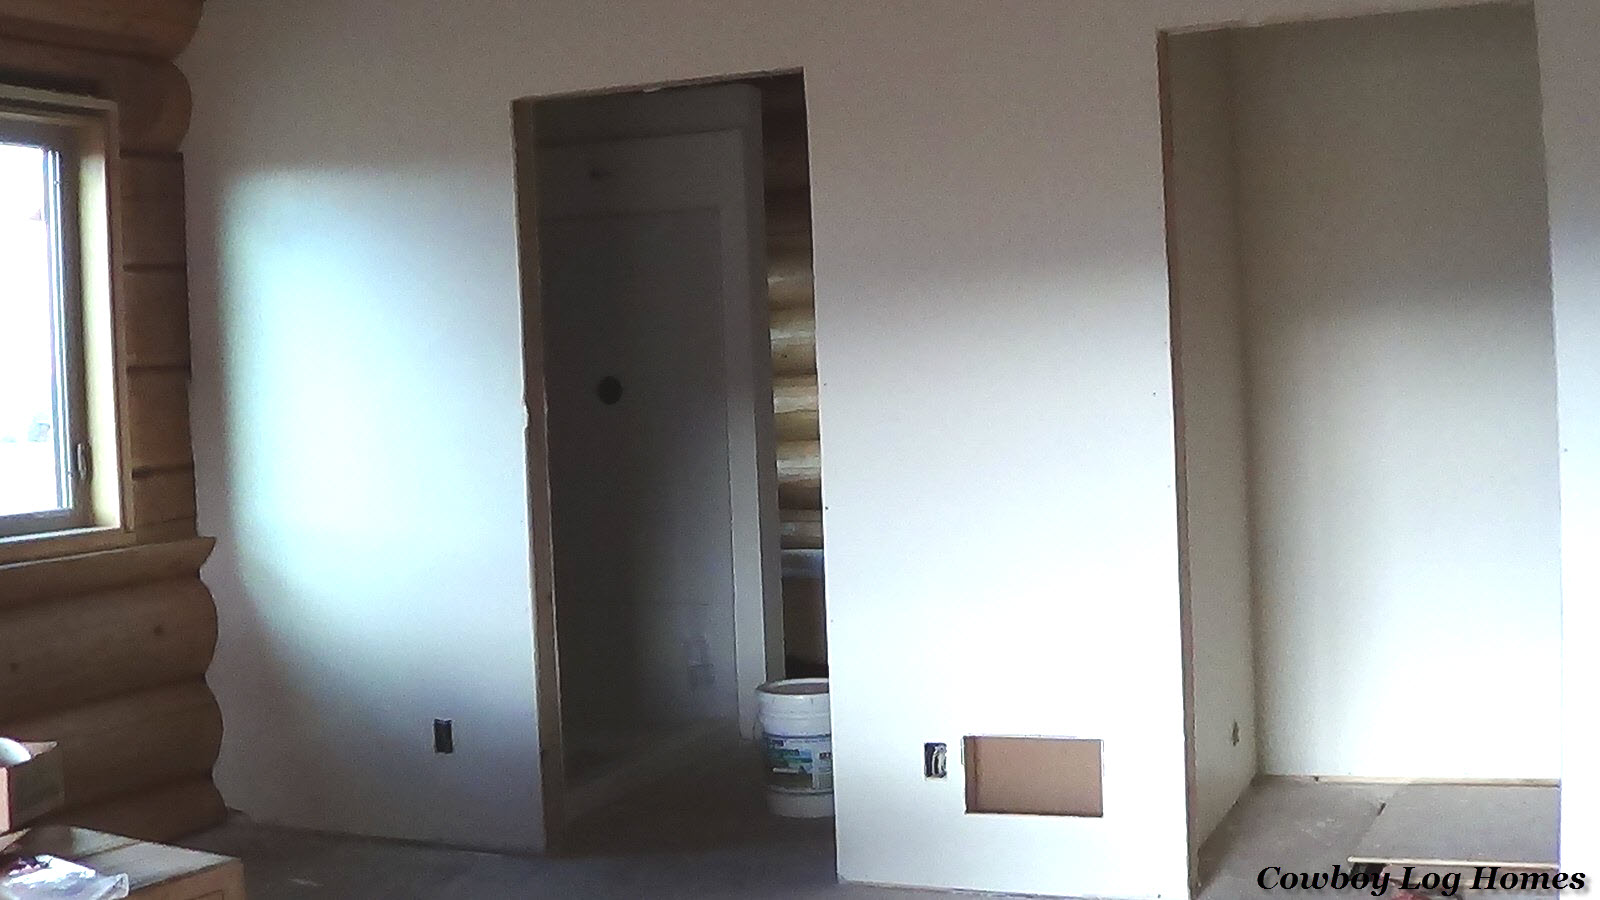 sept 20th drywall master bedroom log home